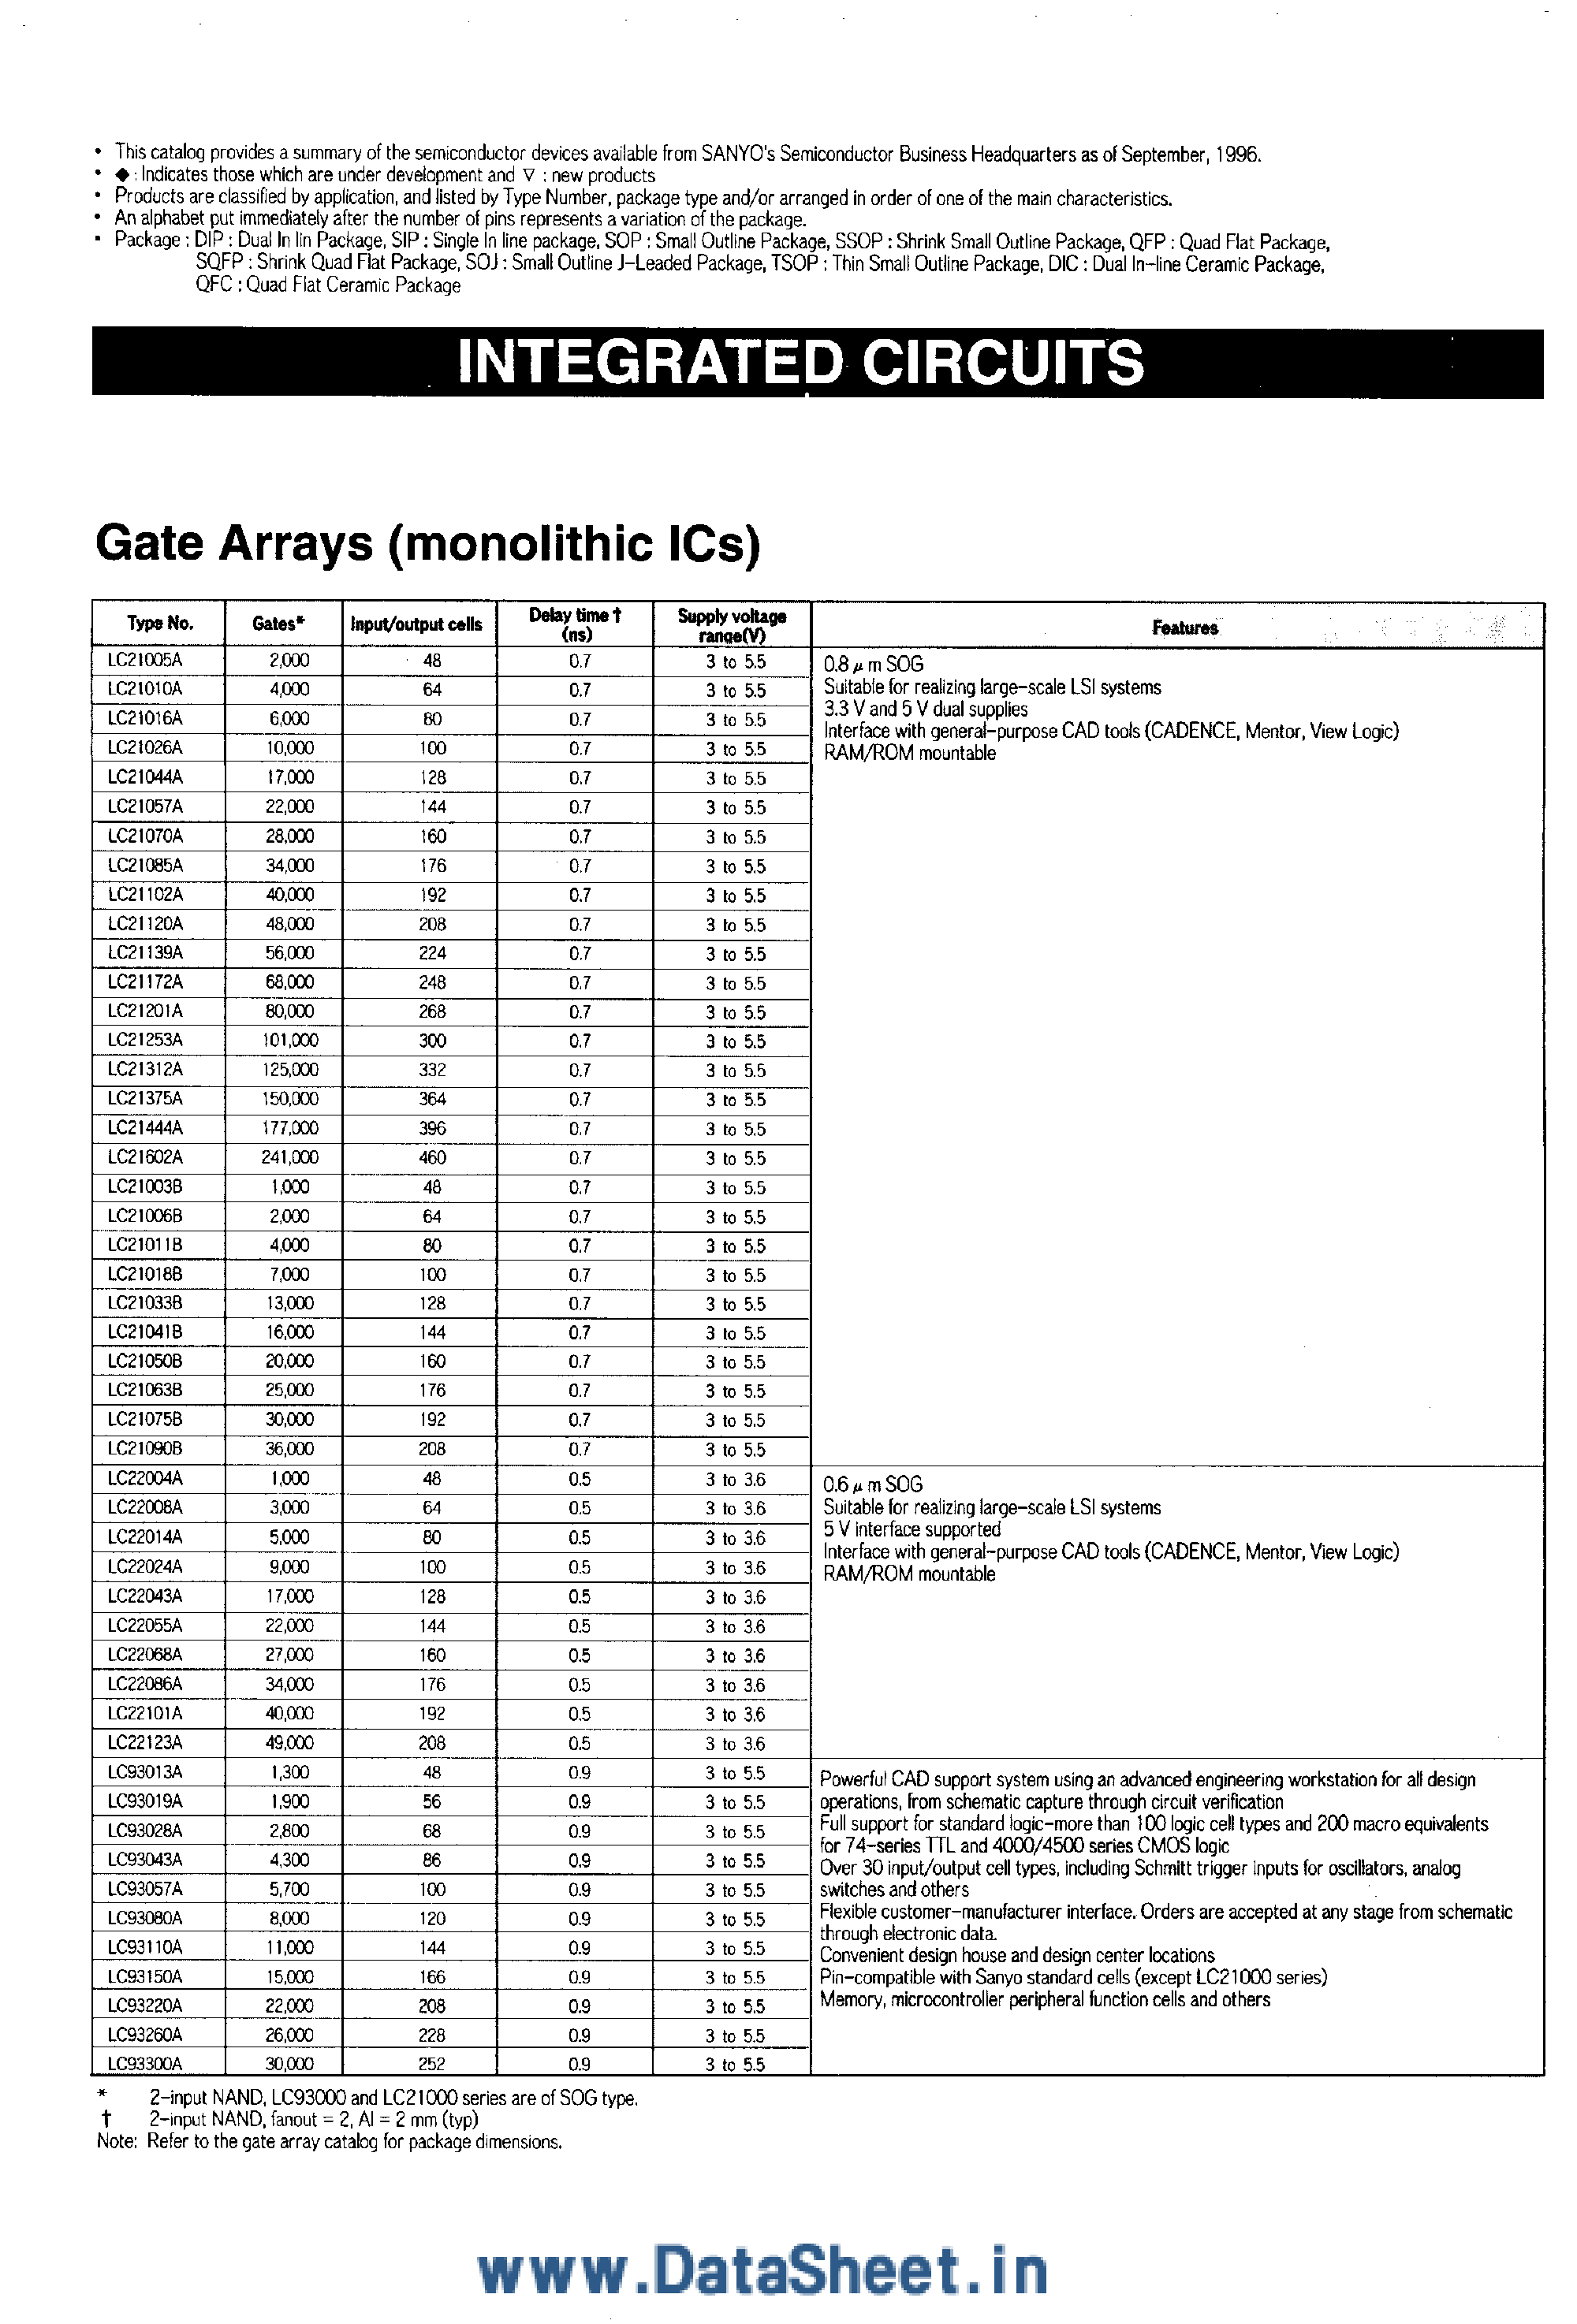 Даташит LC21003B - (LC21005A - LC22123A) Gate Arrays Monolithic ICs страница 1